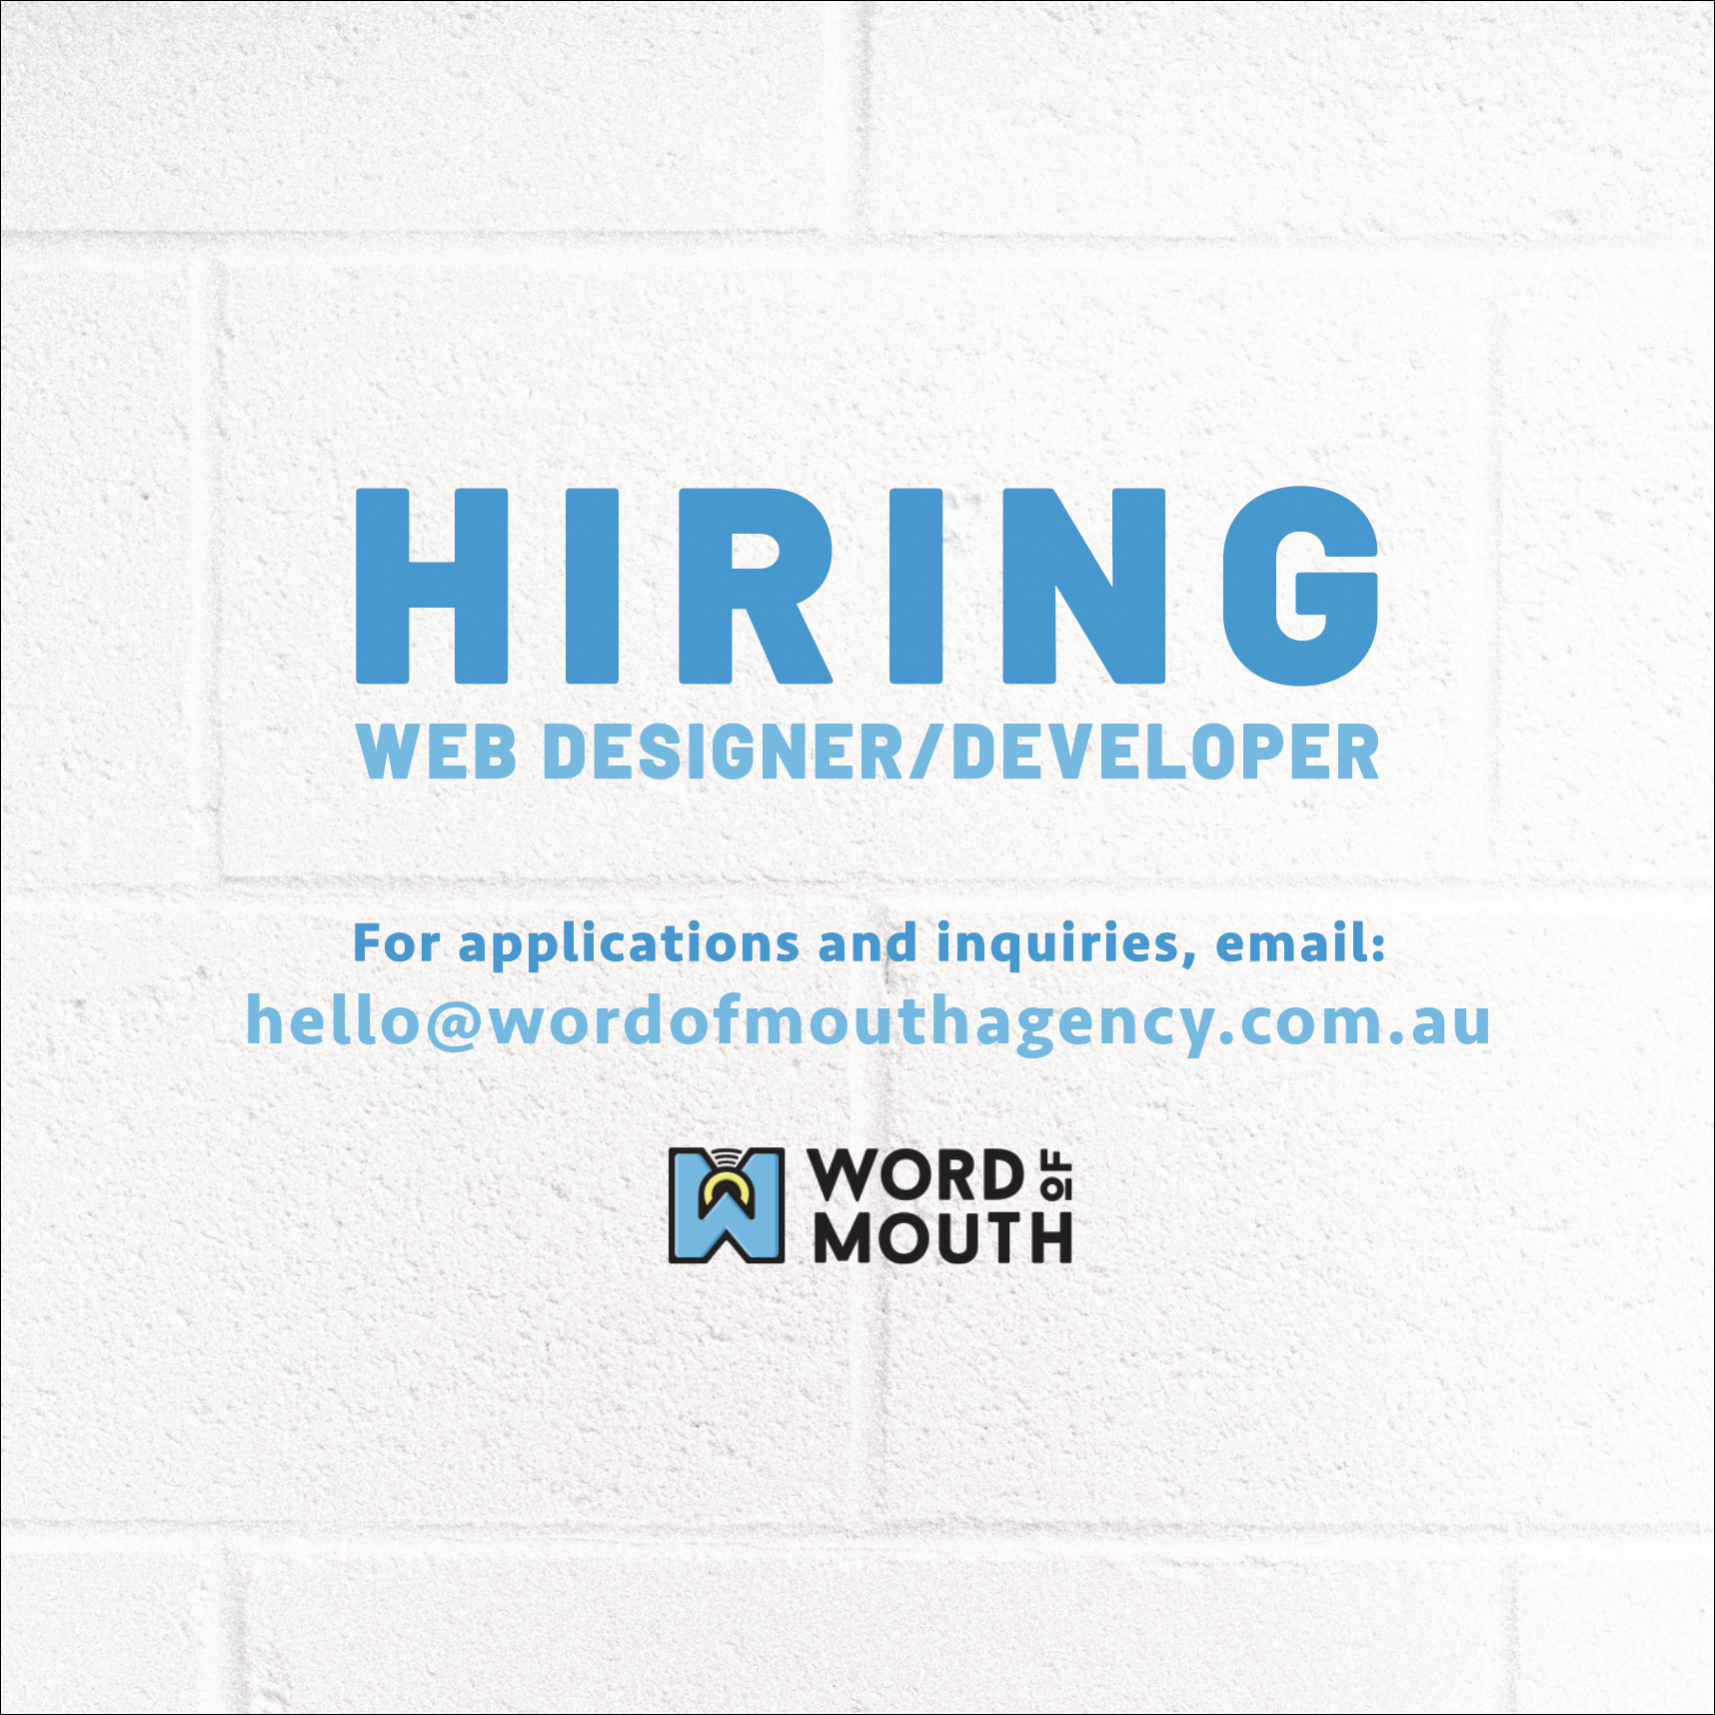 Digital Agency job ad for Web Designer/ Developer